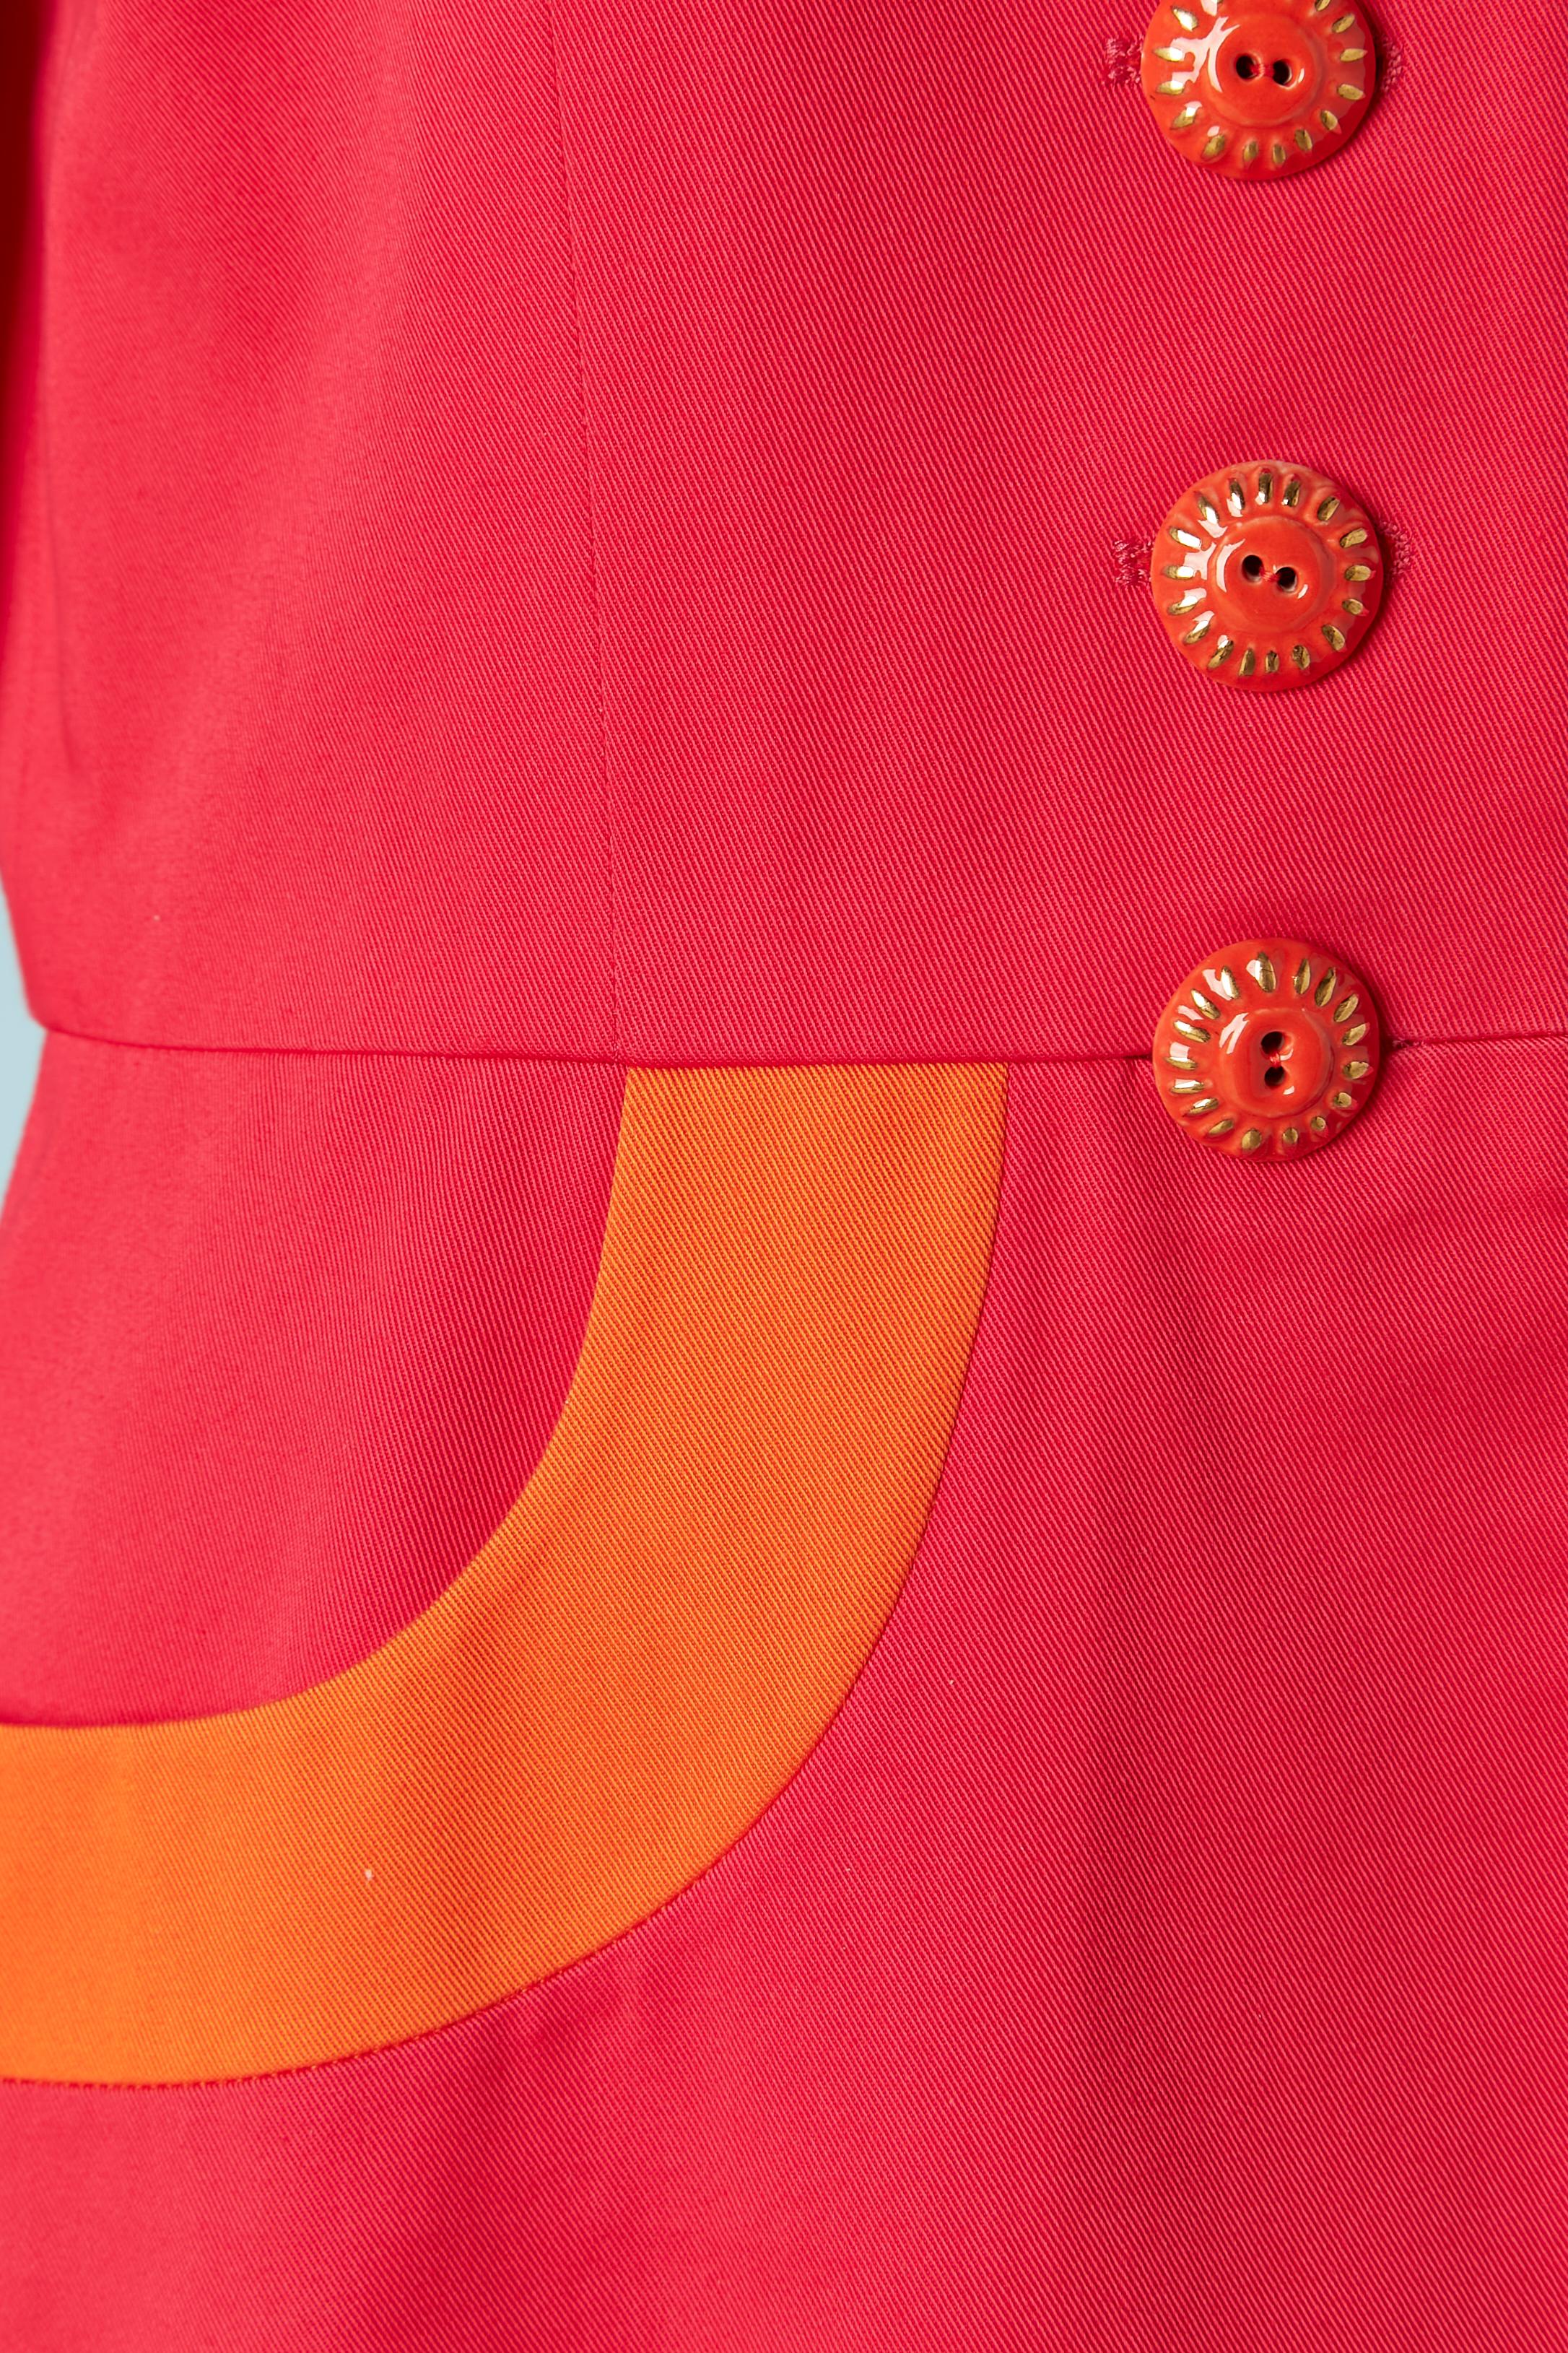 Orange and fushia jacket with ceramic buttons Yves Saint Laurent Rive Gauche  In Excellent Condition For Sale In Saint-Ouen-Sur-Seine, FR